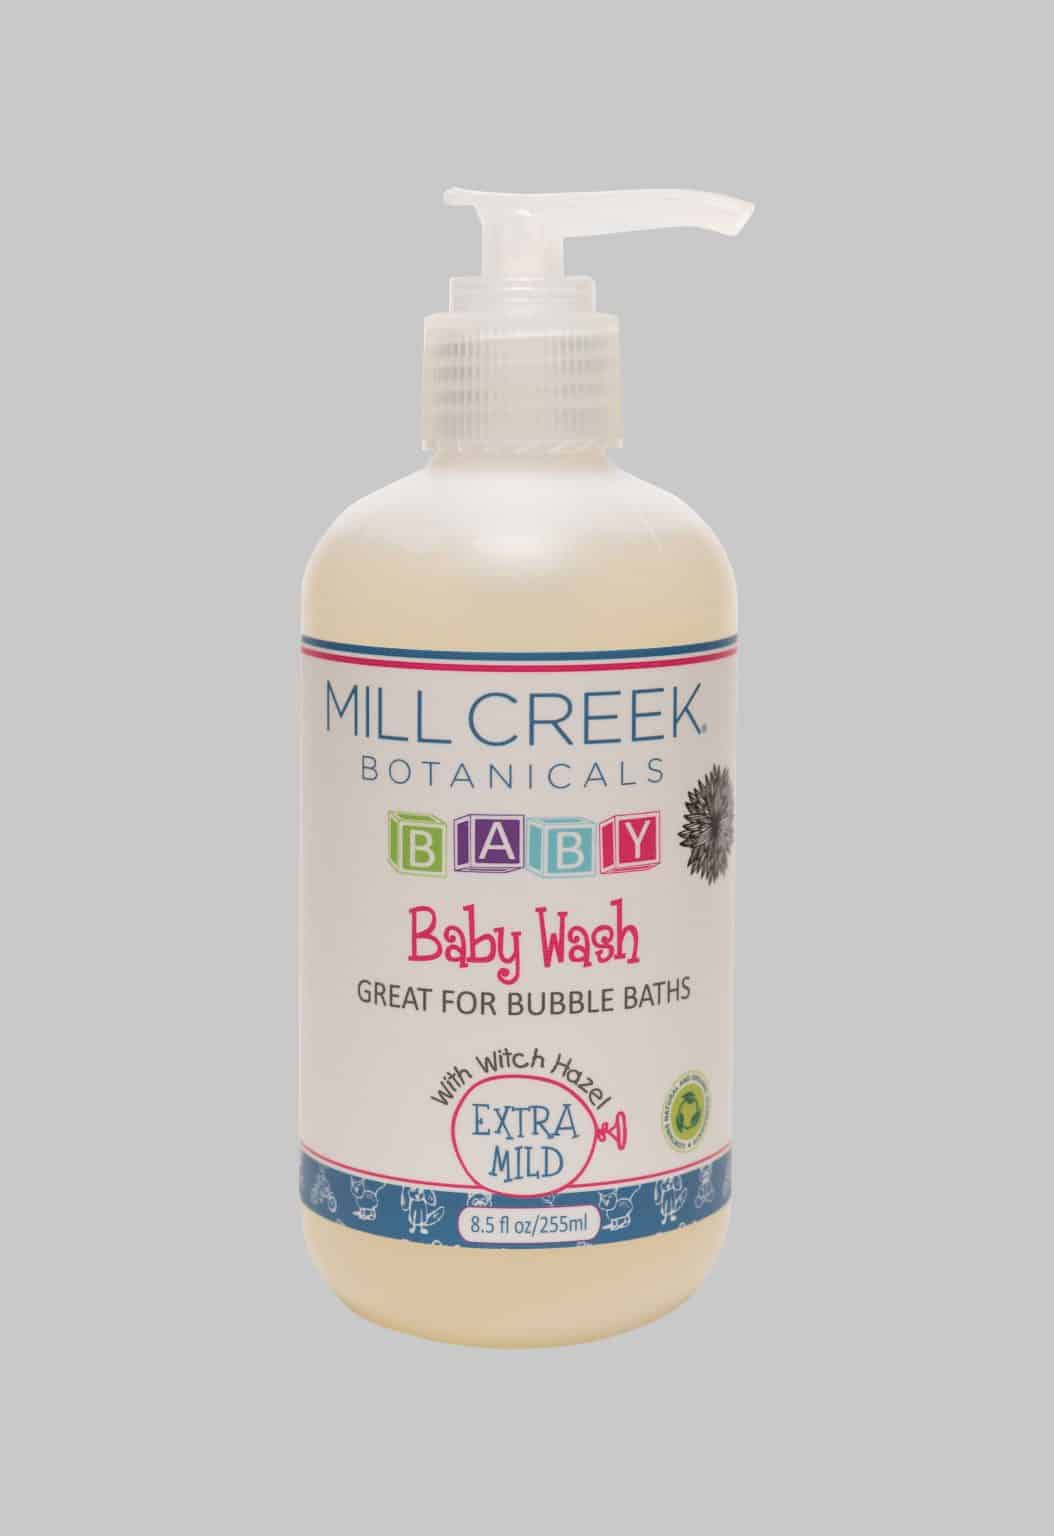 Mill Creek Baby Wash with Witch Hazel